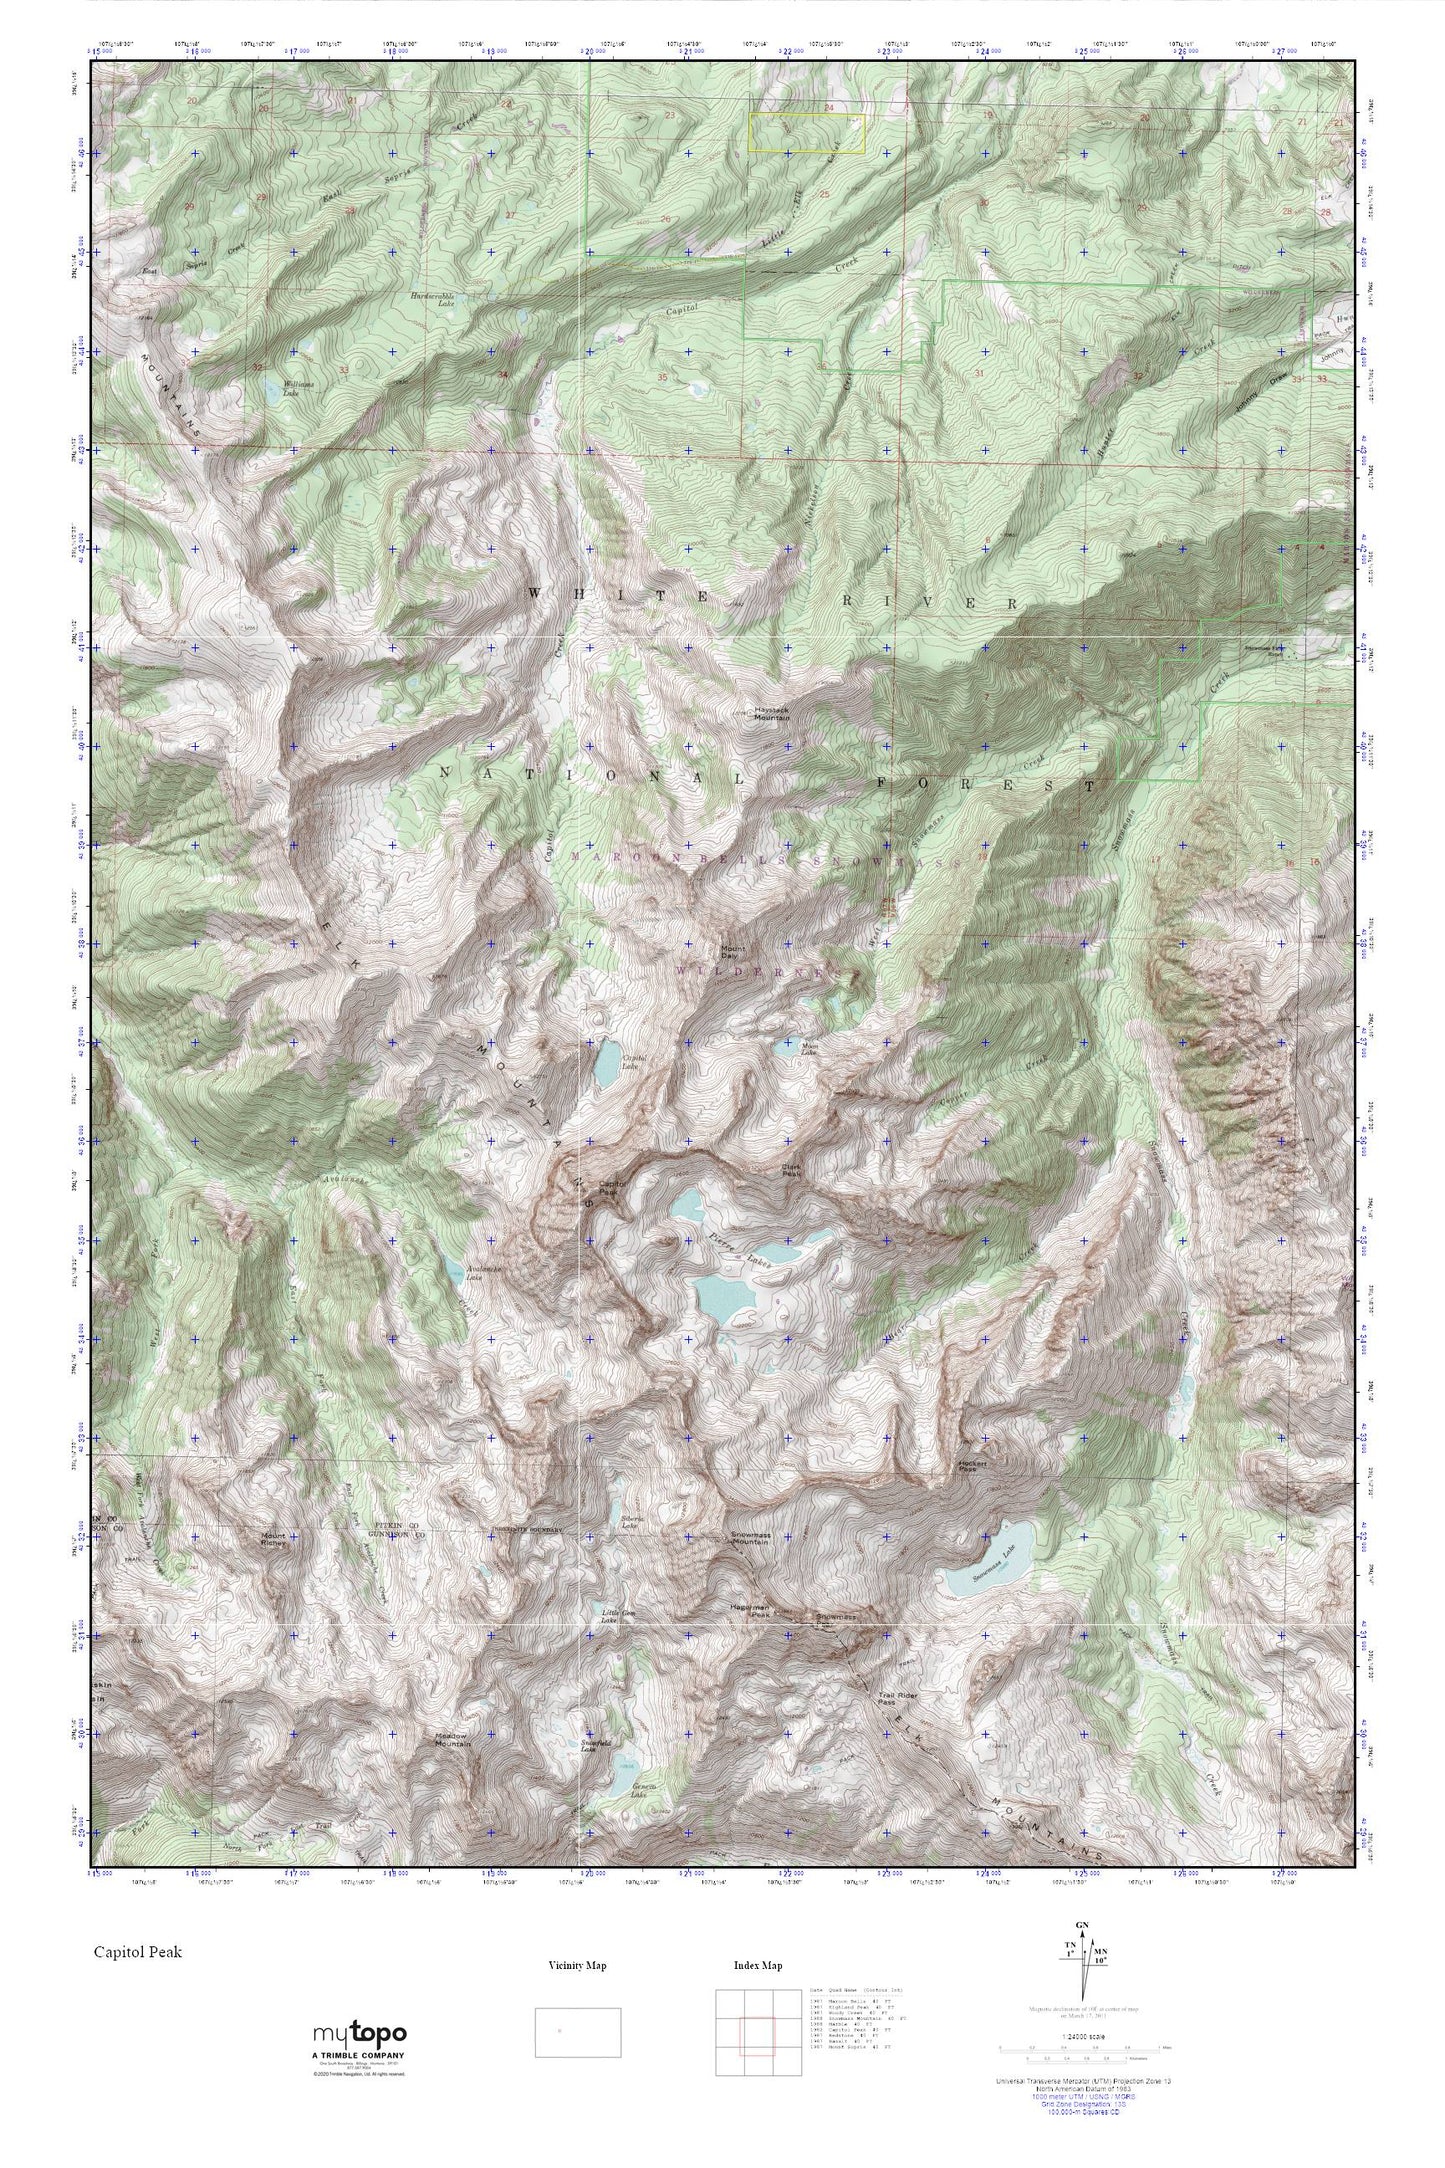 Capitol Peak MyTopo Explorer Series Map Image